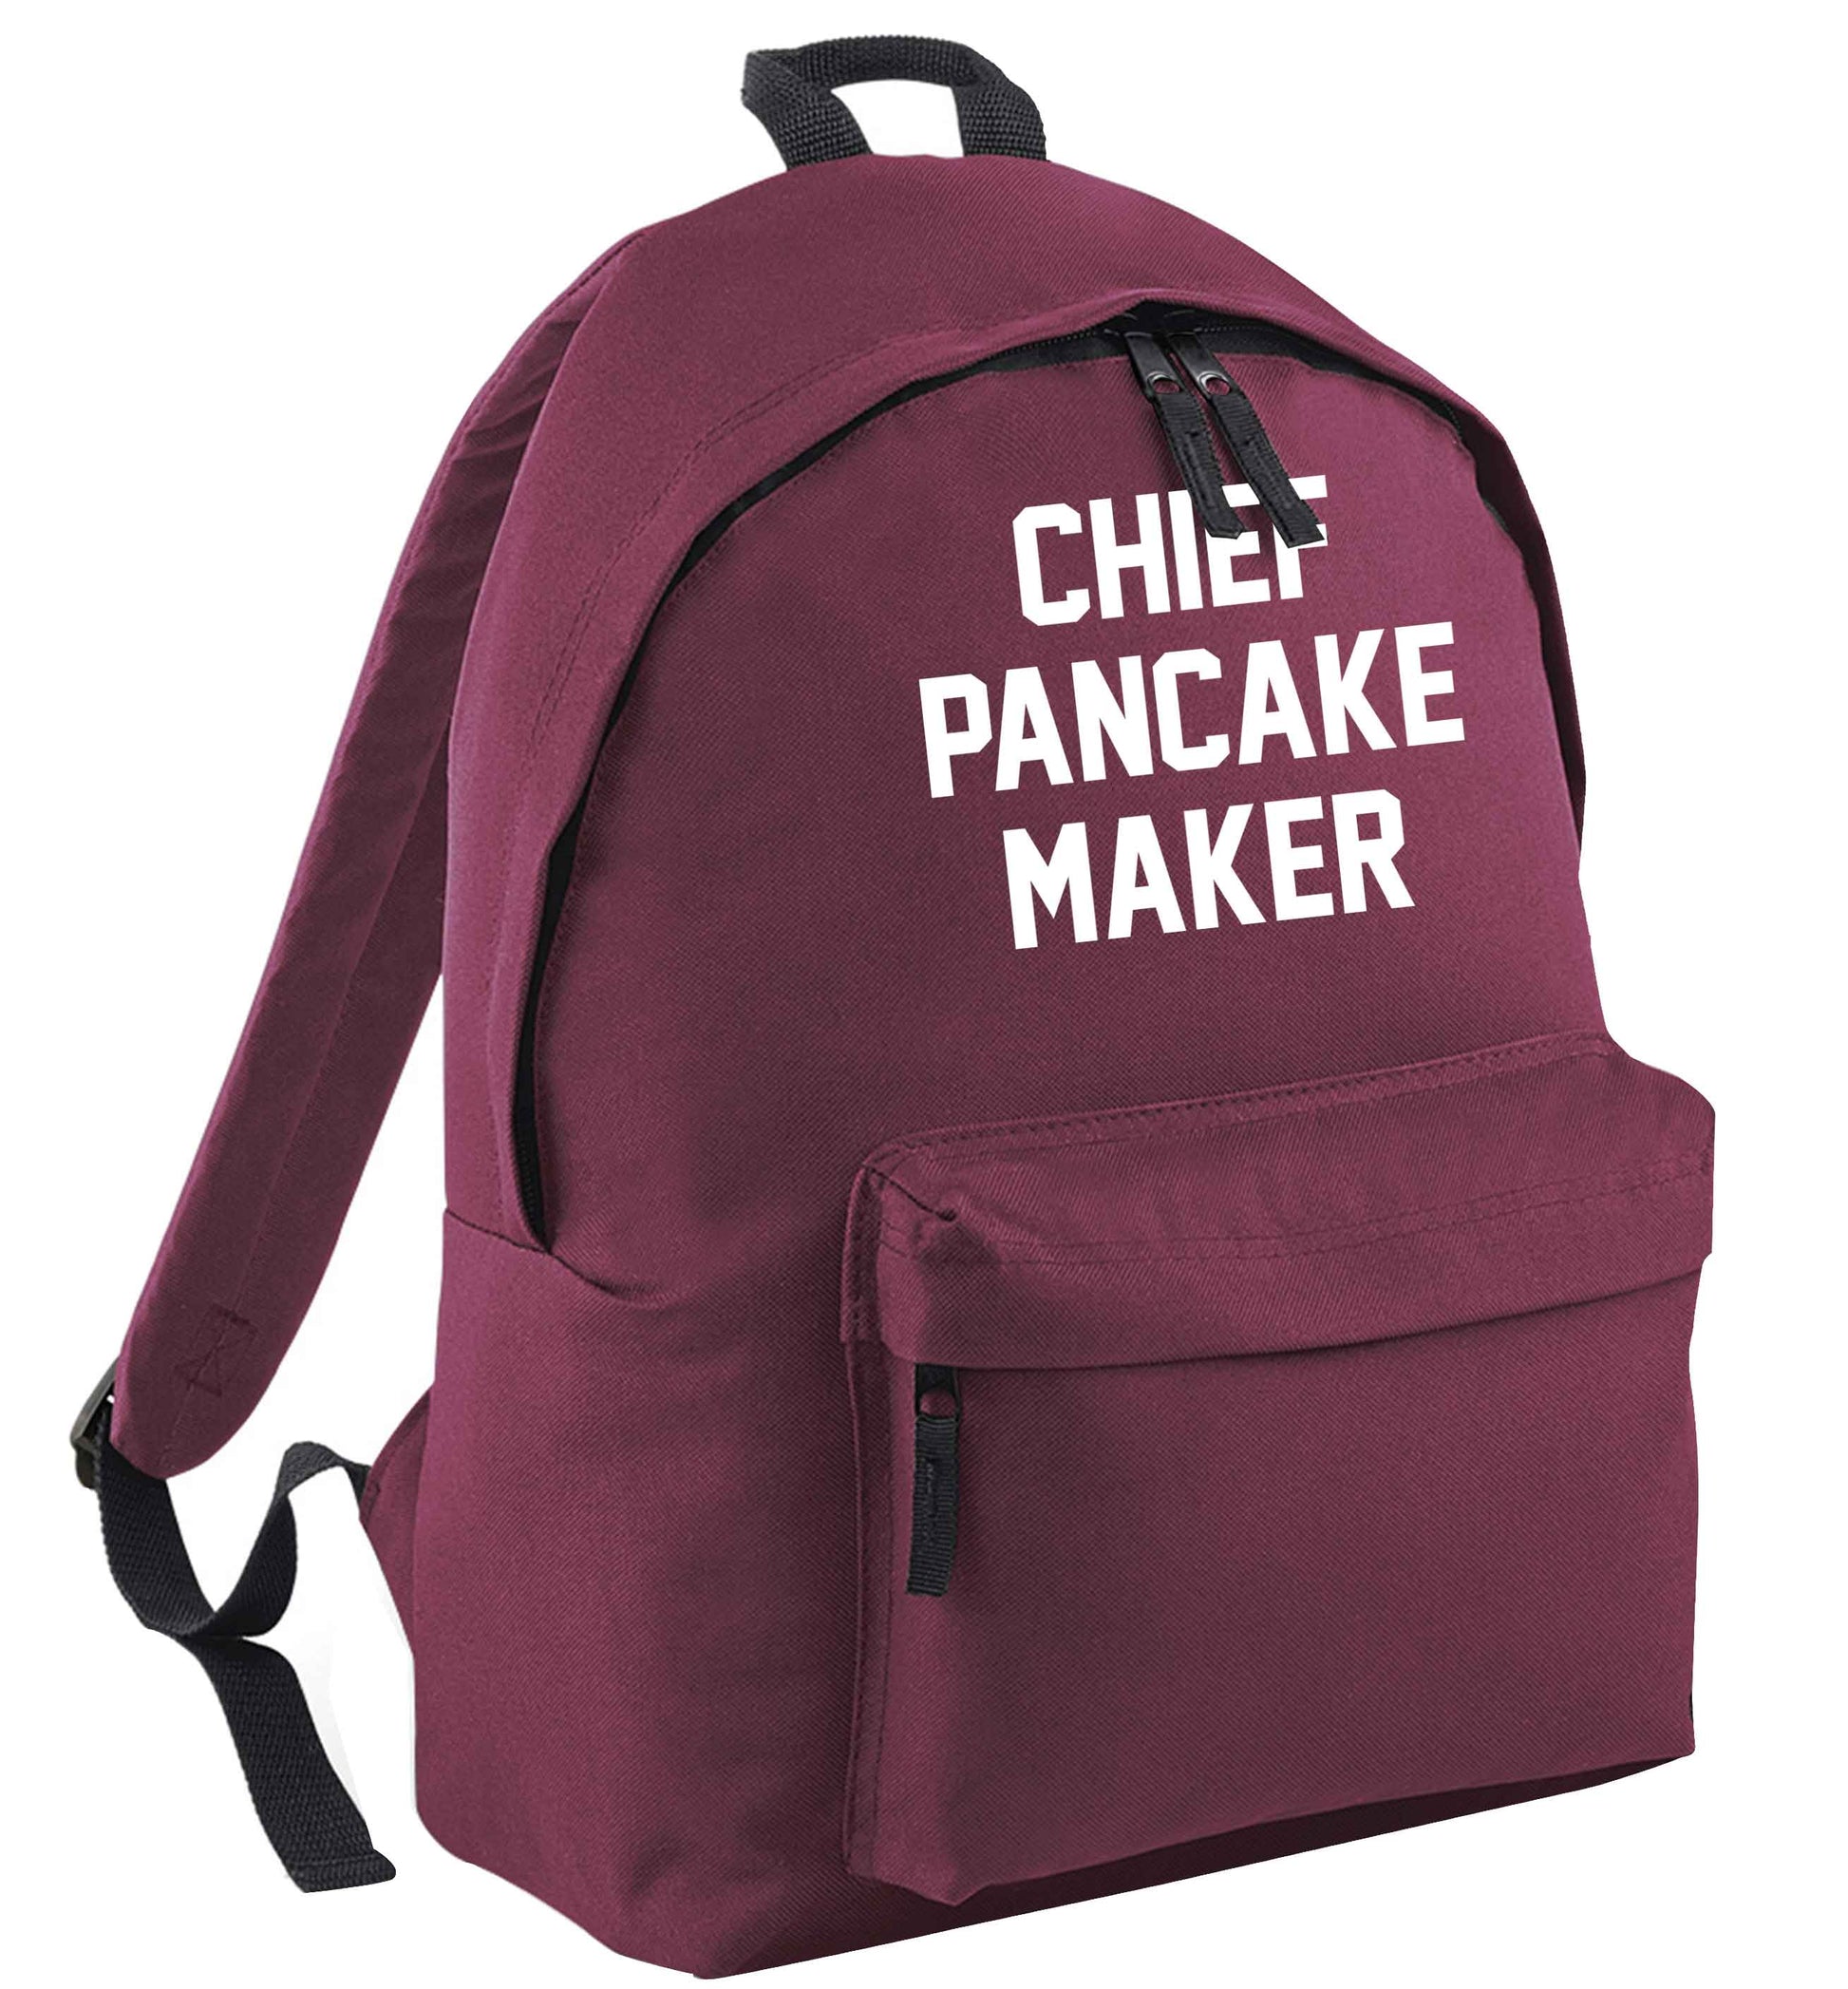 Chief pancake maker black adults backpack